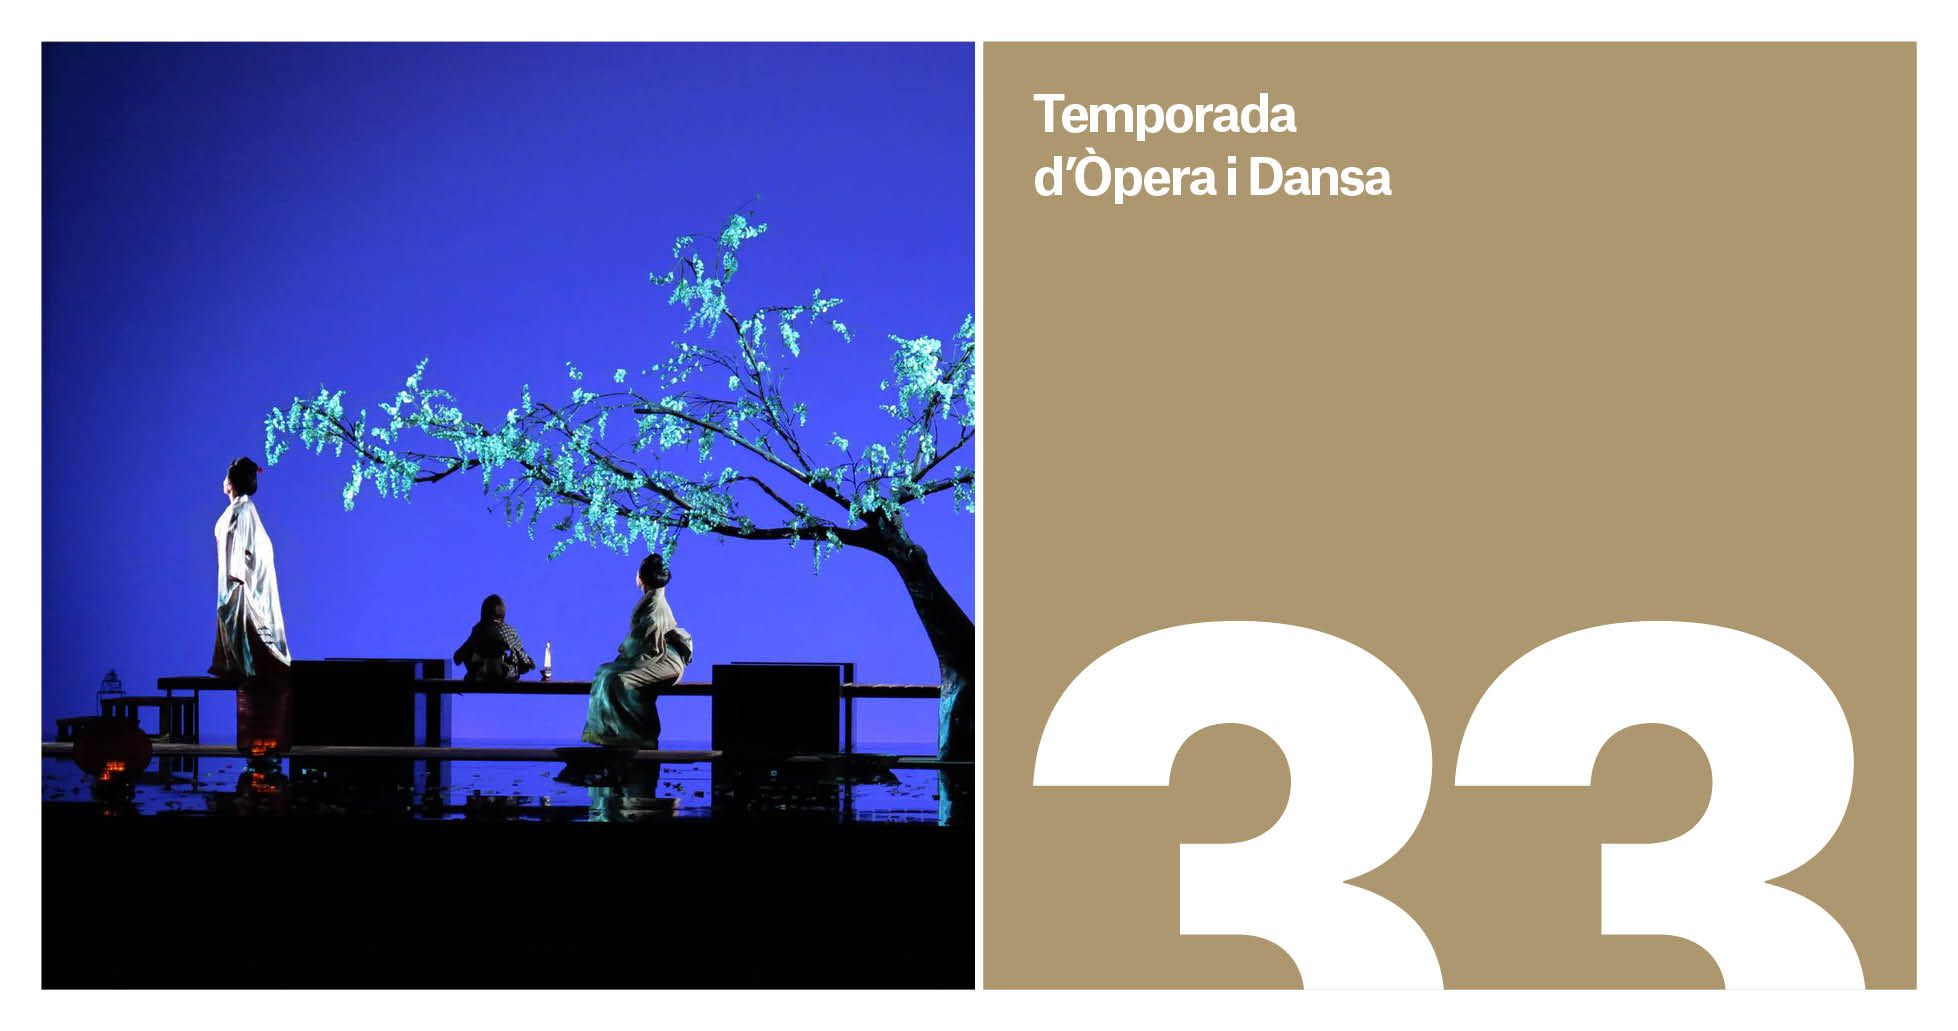 33 Temporada d'òpera i dansa